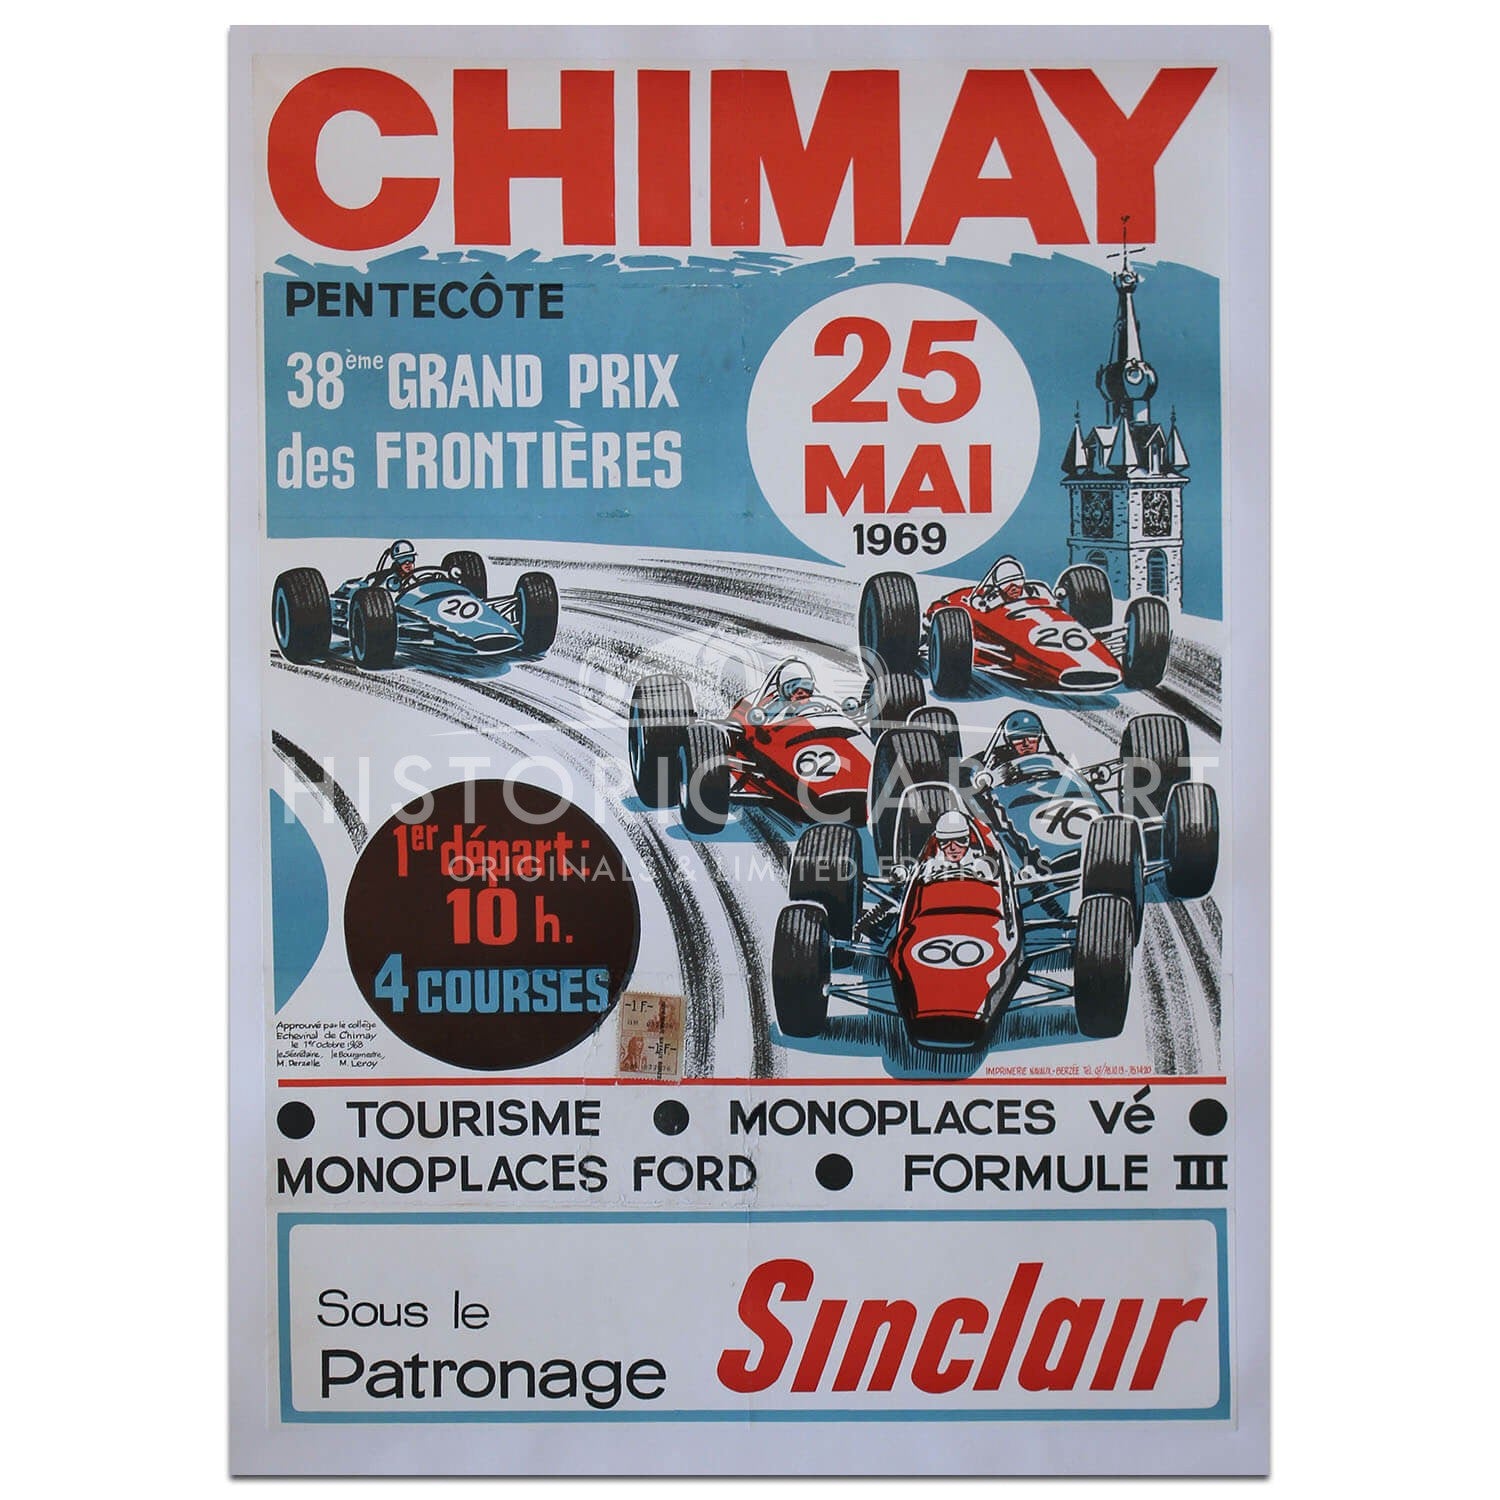 Belgian | Chimay - 38eme Grand Prix des Frontières 1969 Original Poster